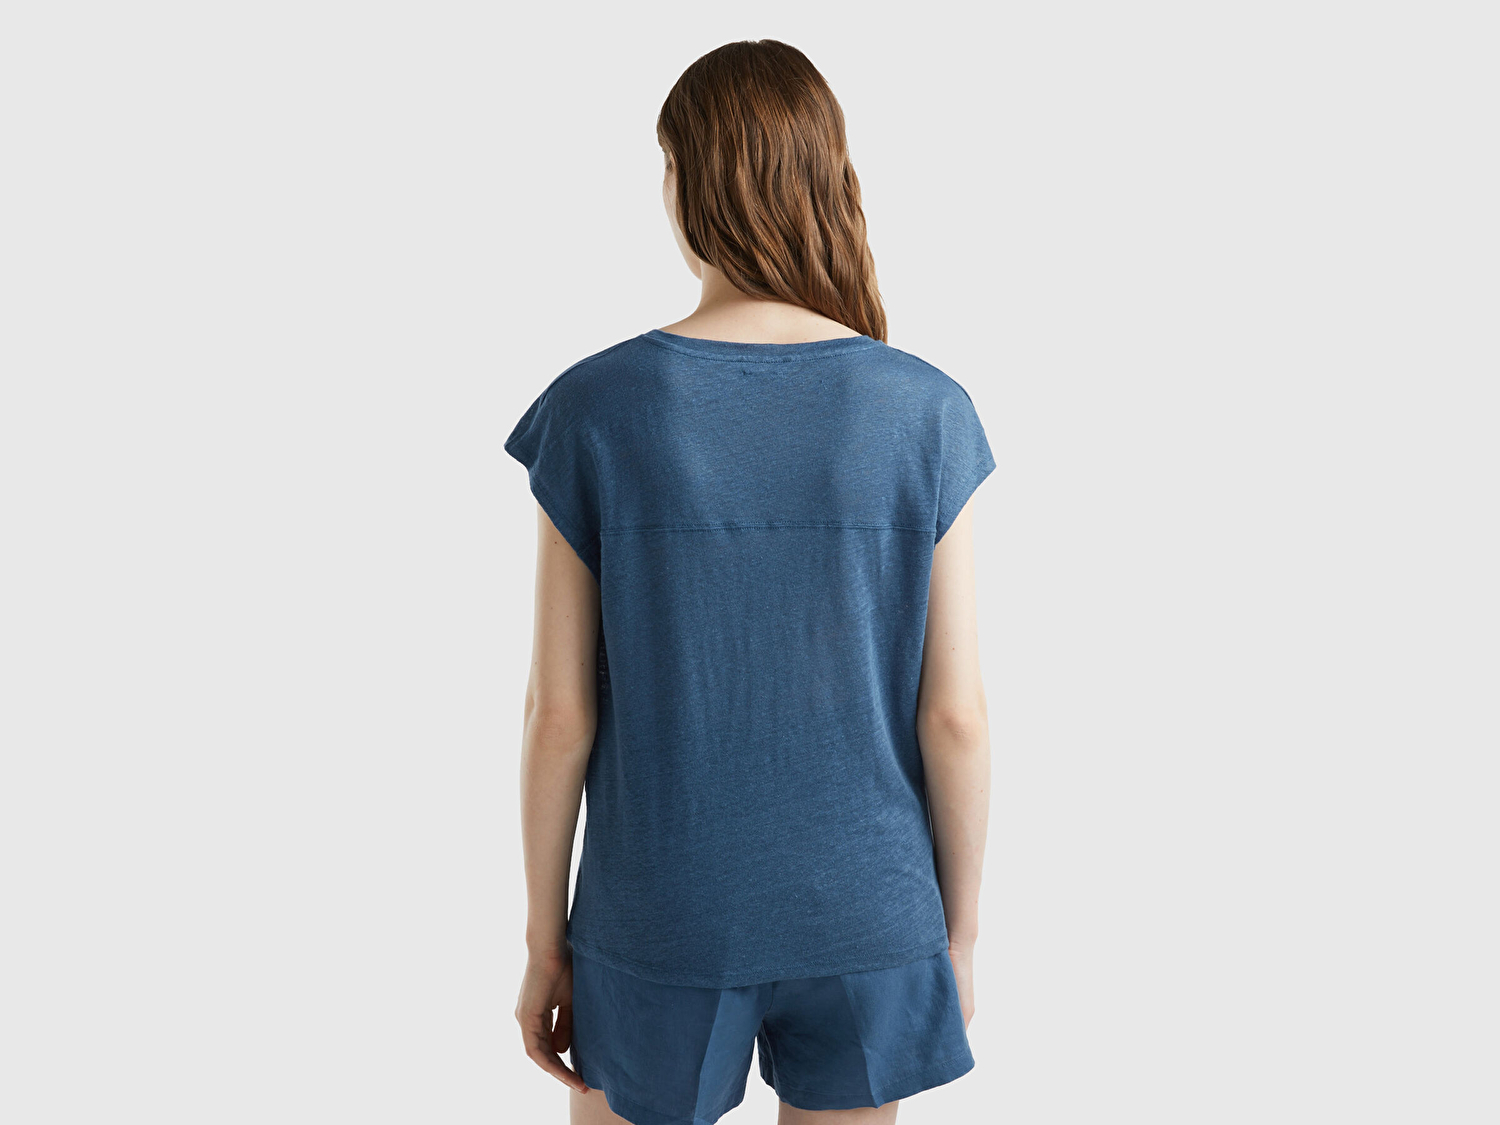 Benetton Kadın Gece Mavisi %100 Keten Rahat Kalıp Derin V Yaka Kolsuz T-Shirt